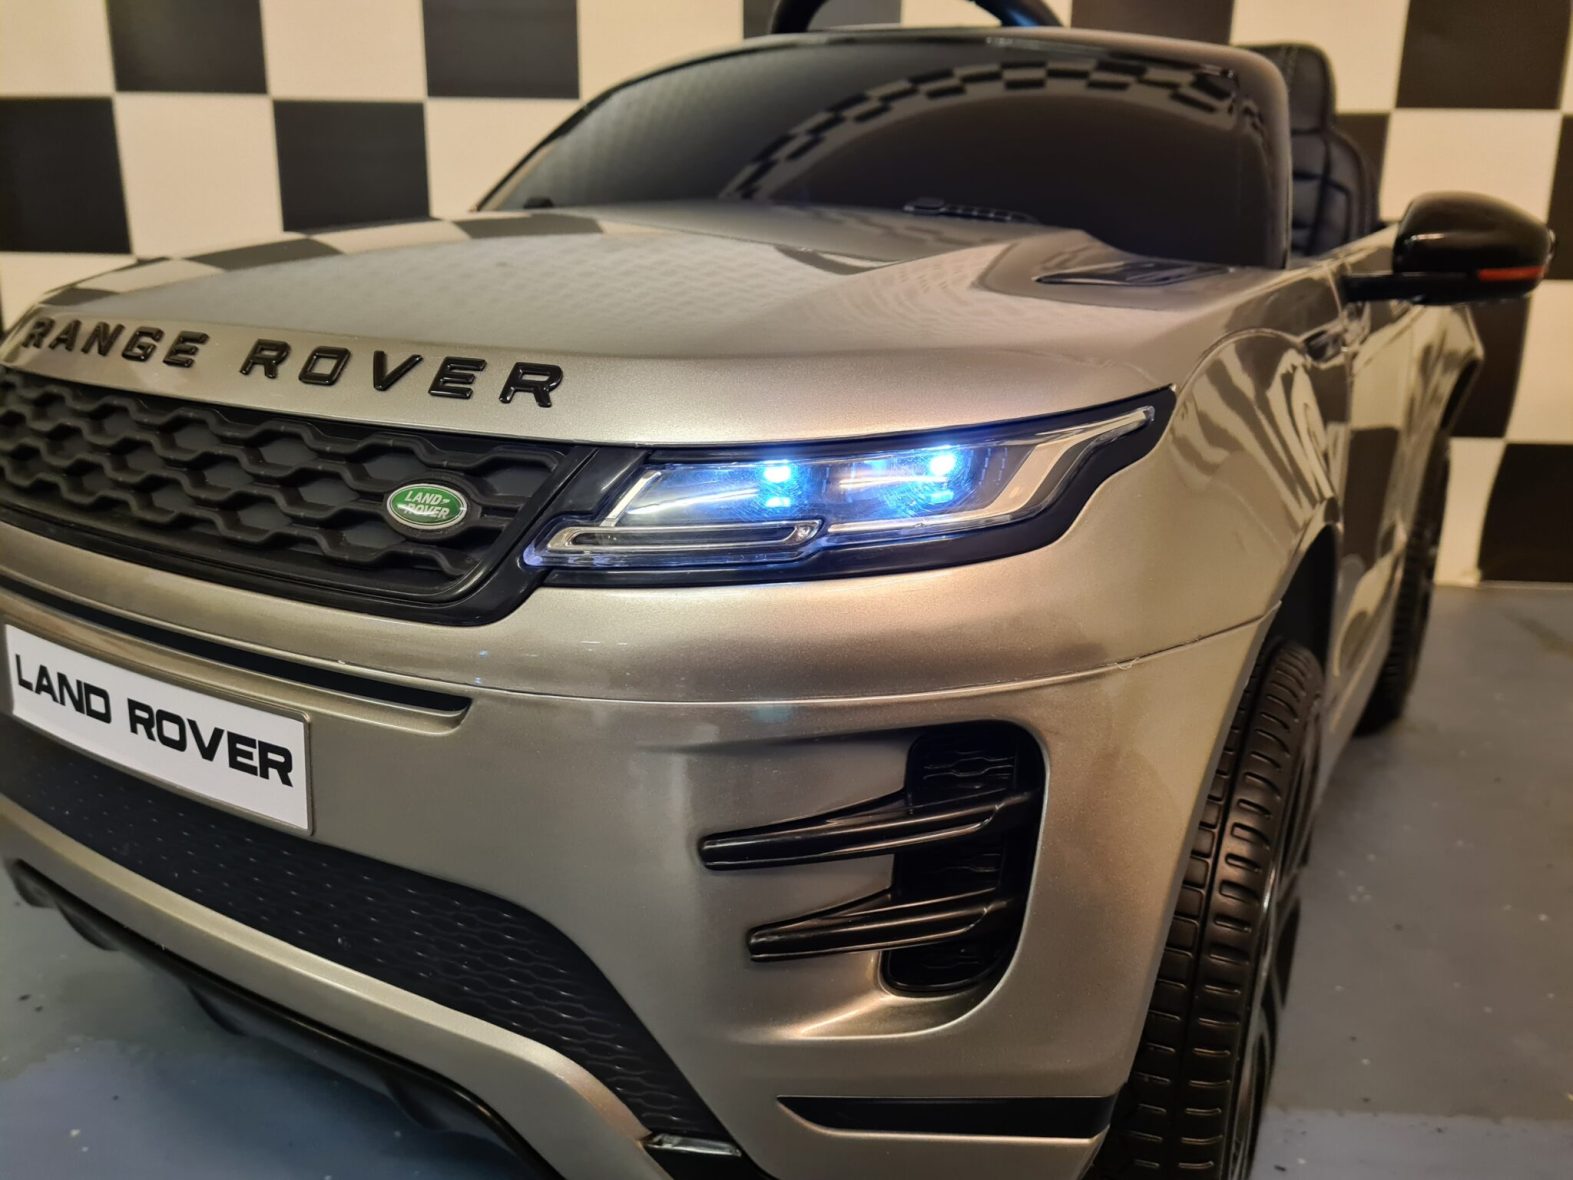 Accu-auto-kind-Range-Rover-12volt